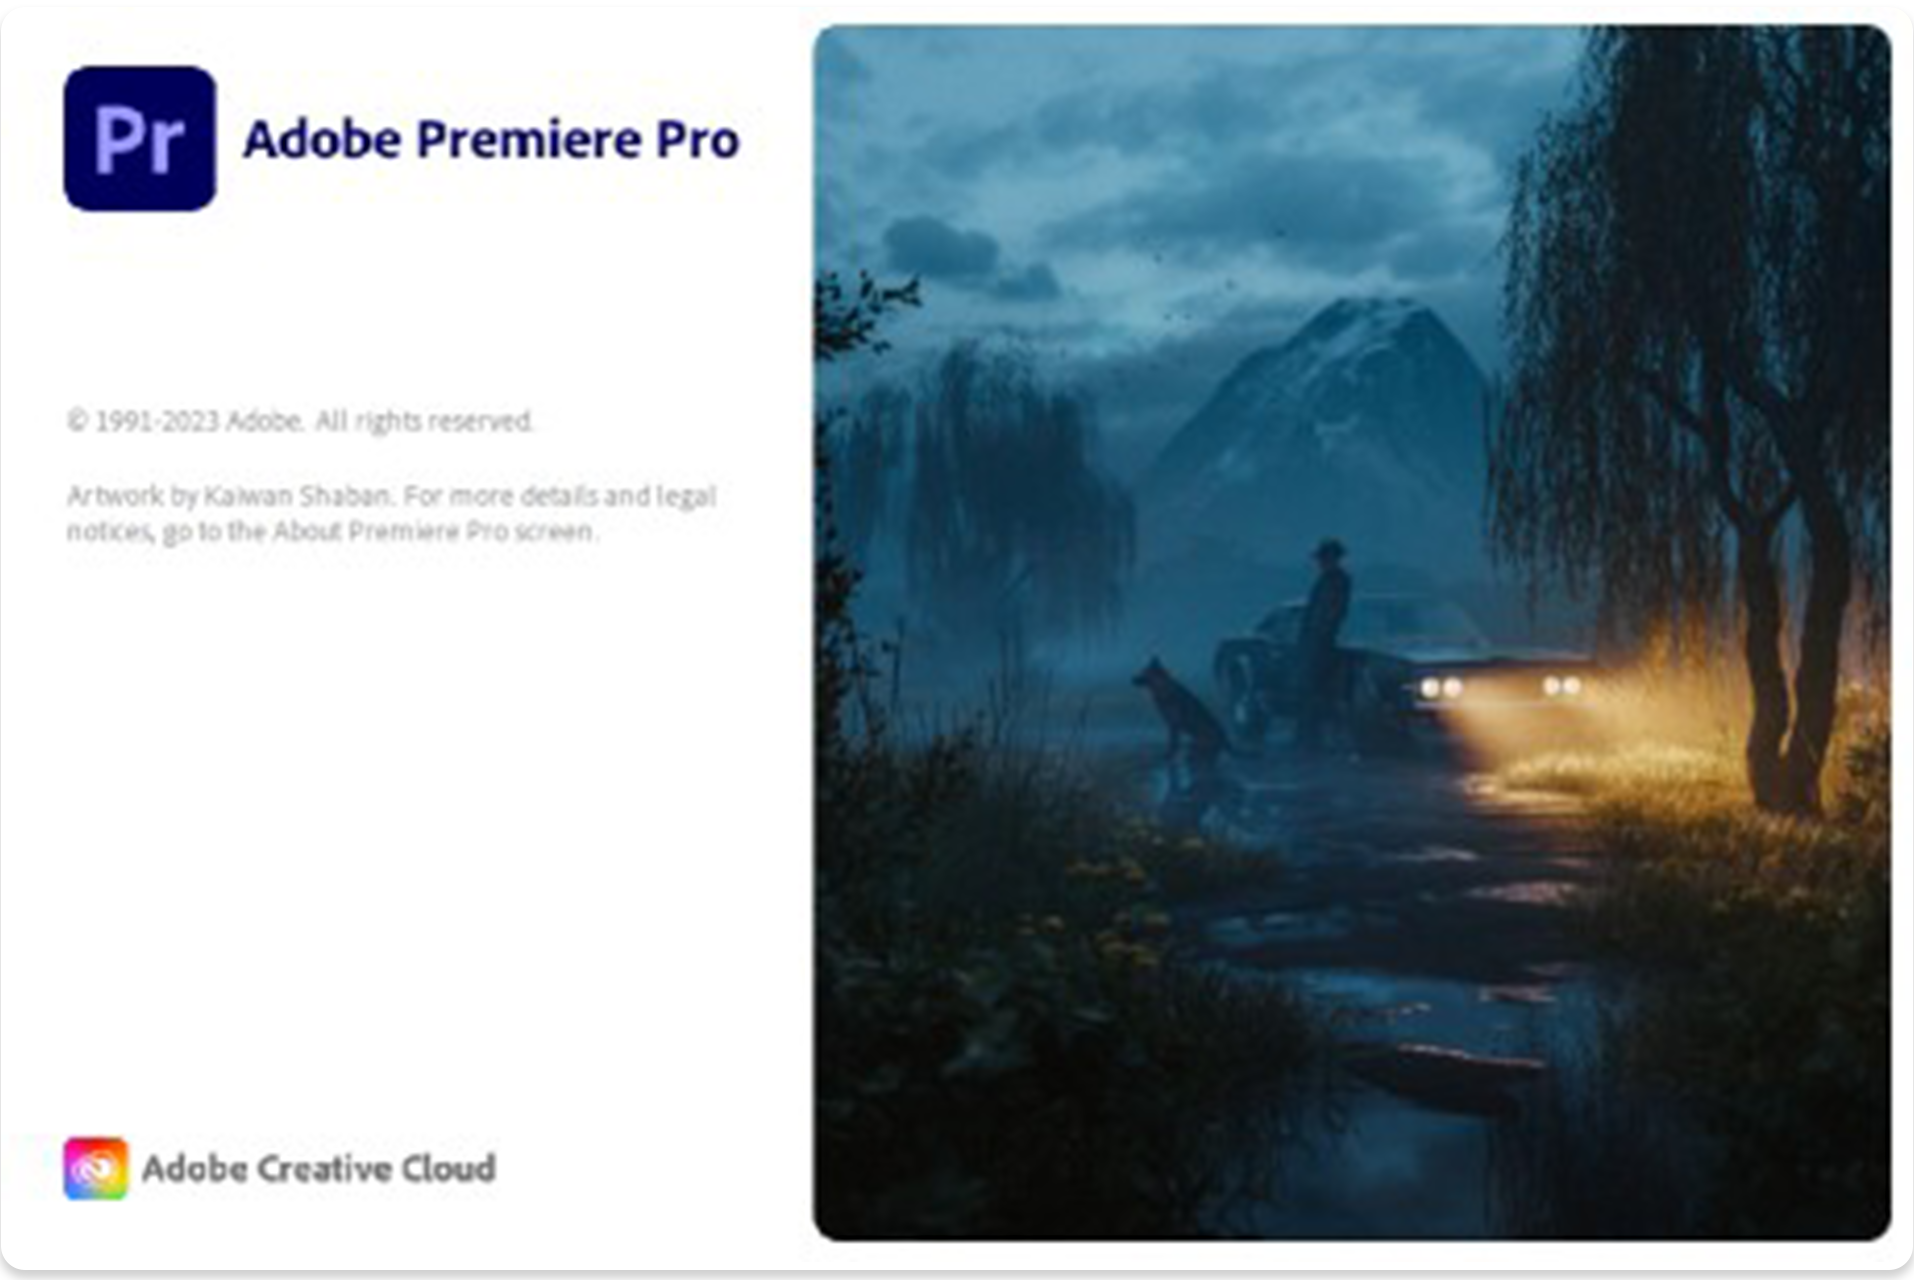 Adobe Premiere Proซอฟต์แวร์ตัดต่อวิดีโอชั้นนำสำหรับภาพยนตร์ทีวีและเว็บ เครื่องมือสร้างสรรค์การทำงานร่วมกับแอปและบริการอื่น ๆ ของ Adobe ช่วยให้คุณสร้างฟุตเทจเป็นภาพยนตร์และวิดีโอที่สวยงามได้ในขั้นตอน